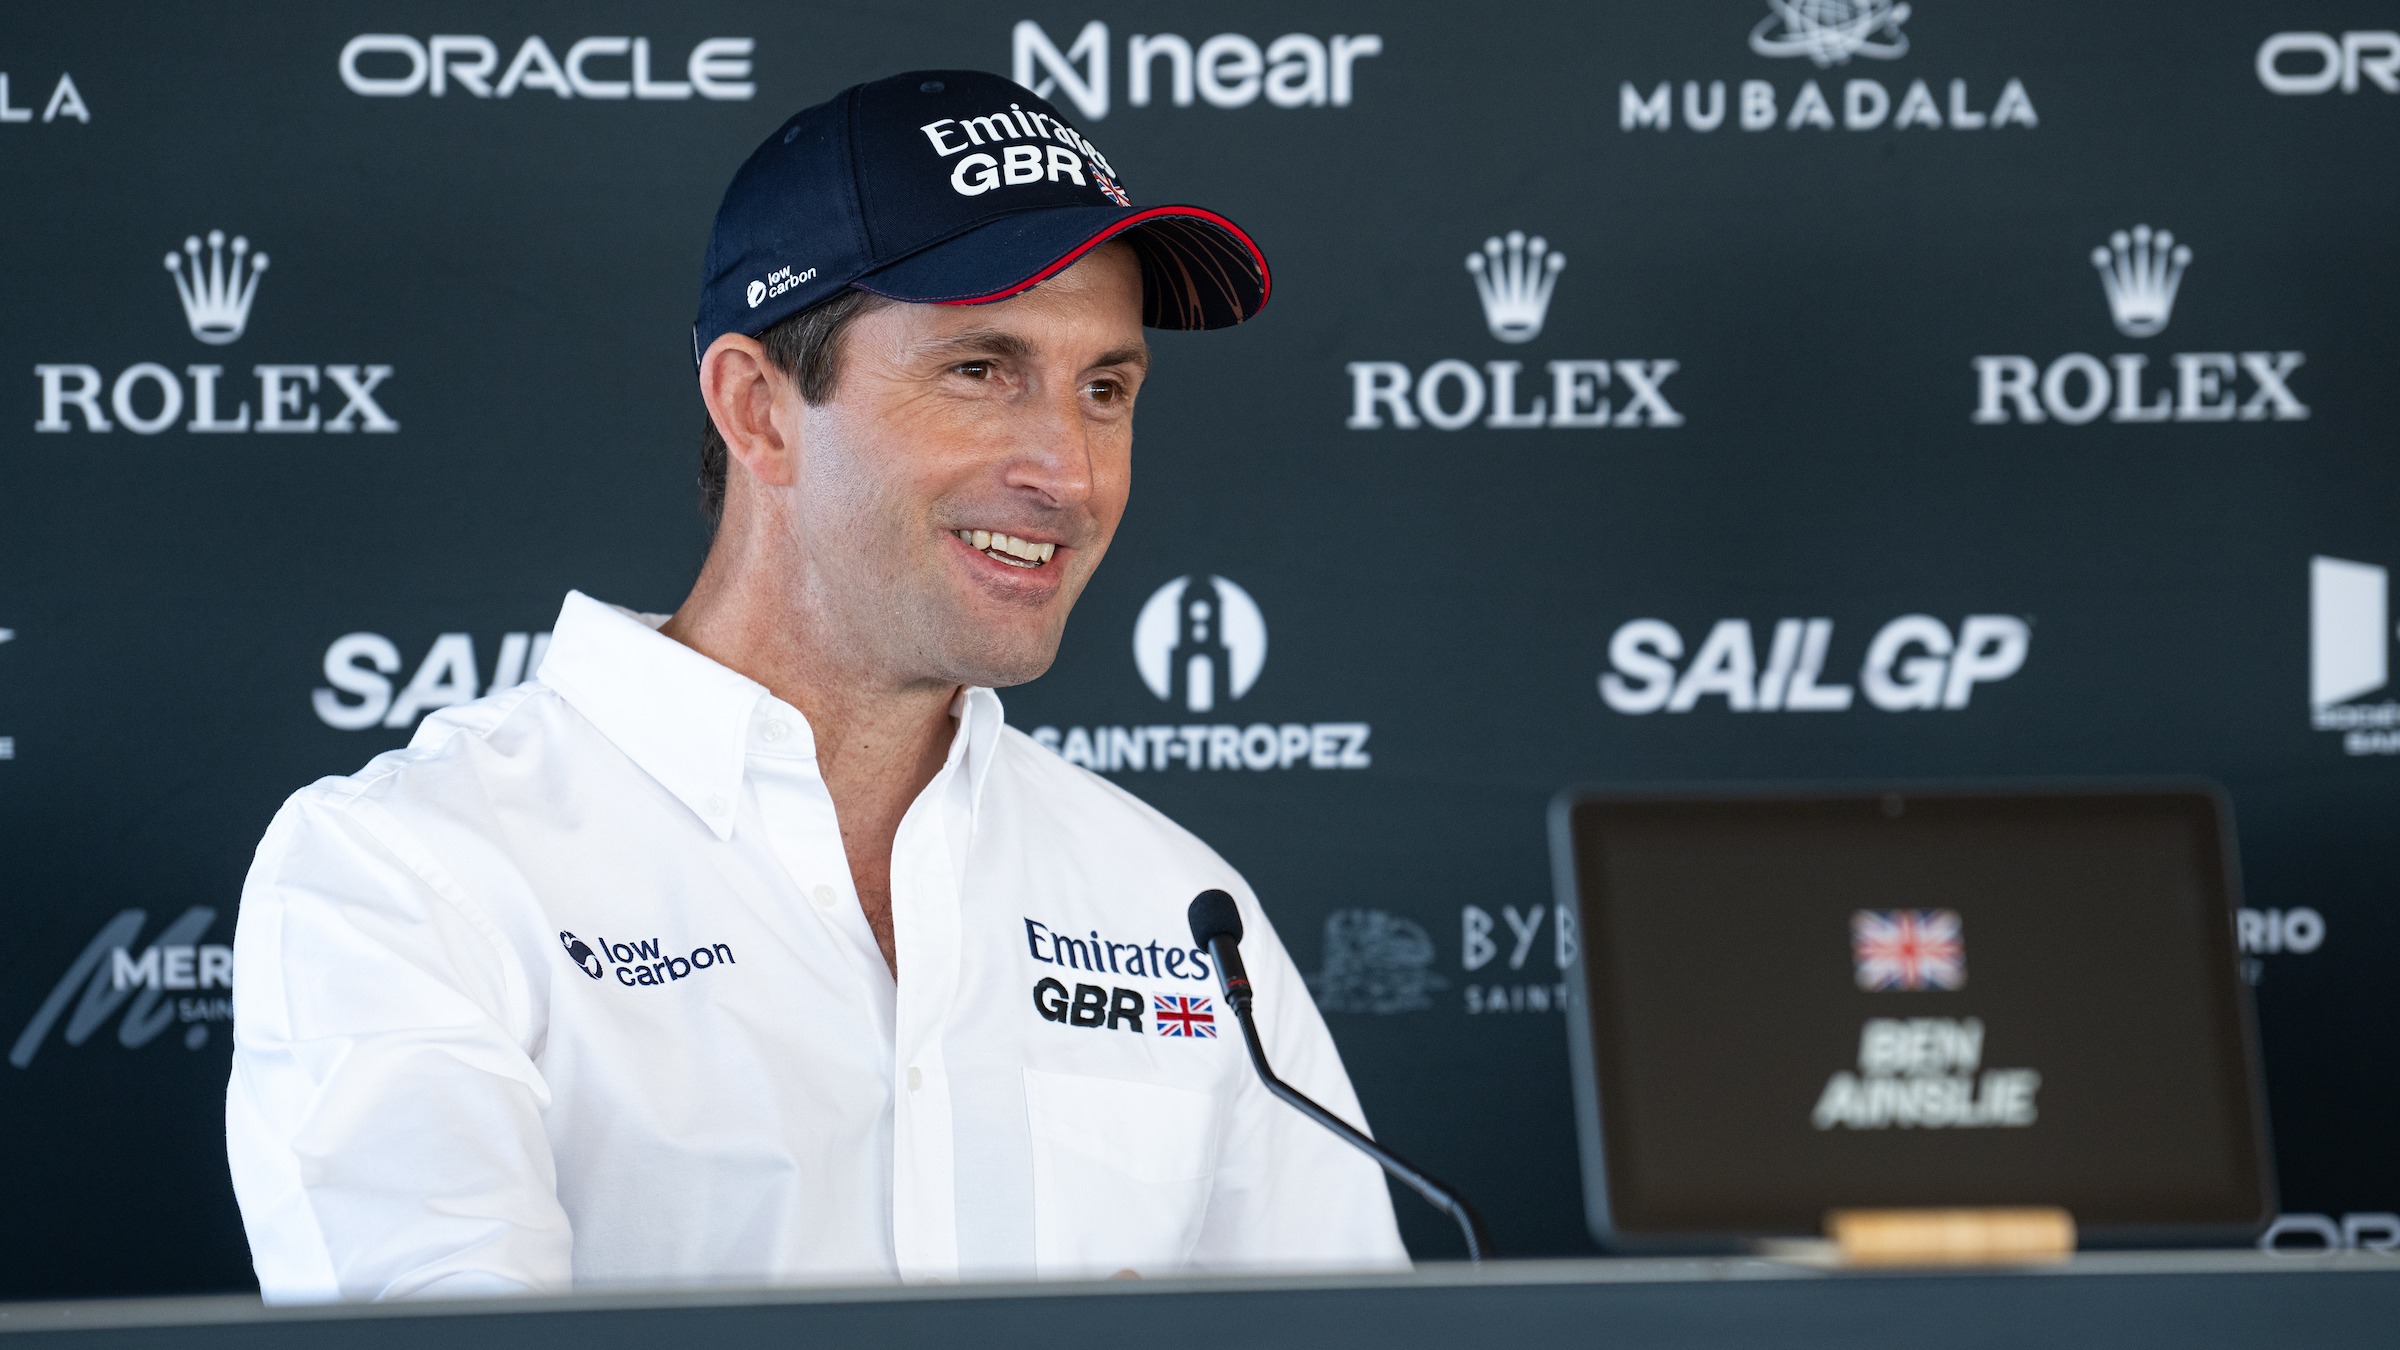 Season 4 // Emirates GBR driver Ben Ainslie at the Saint Tropez press conference 